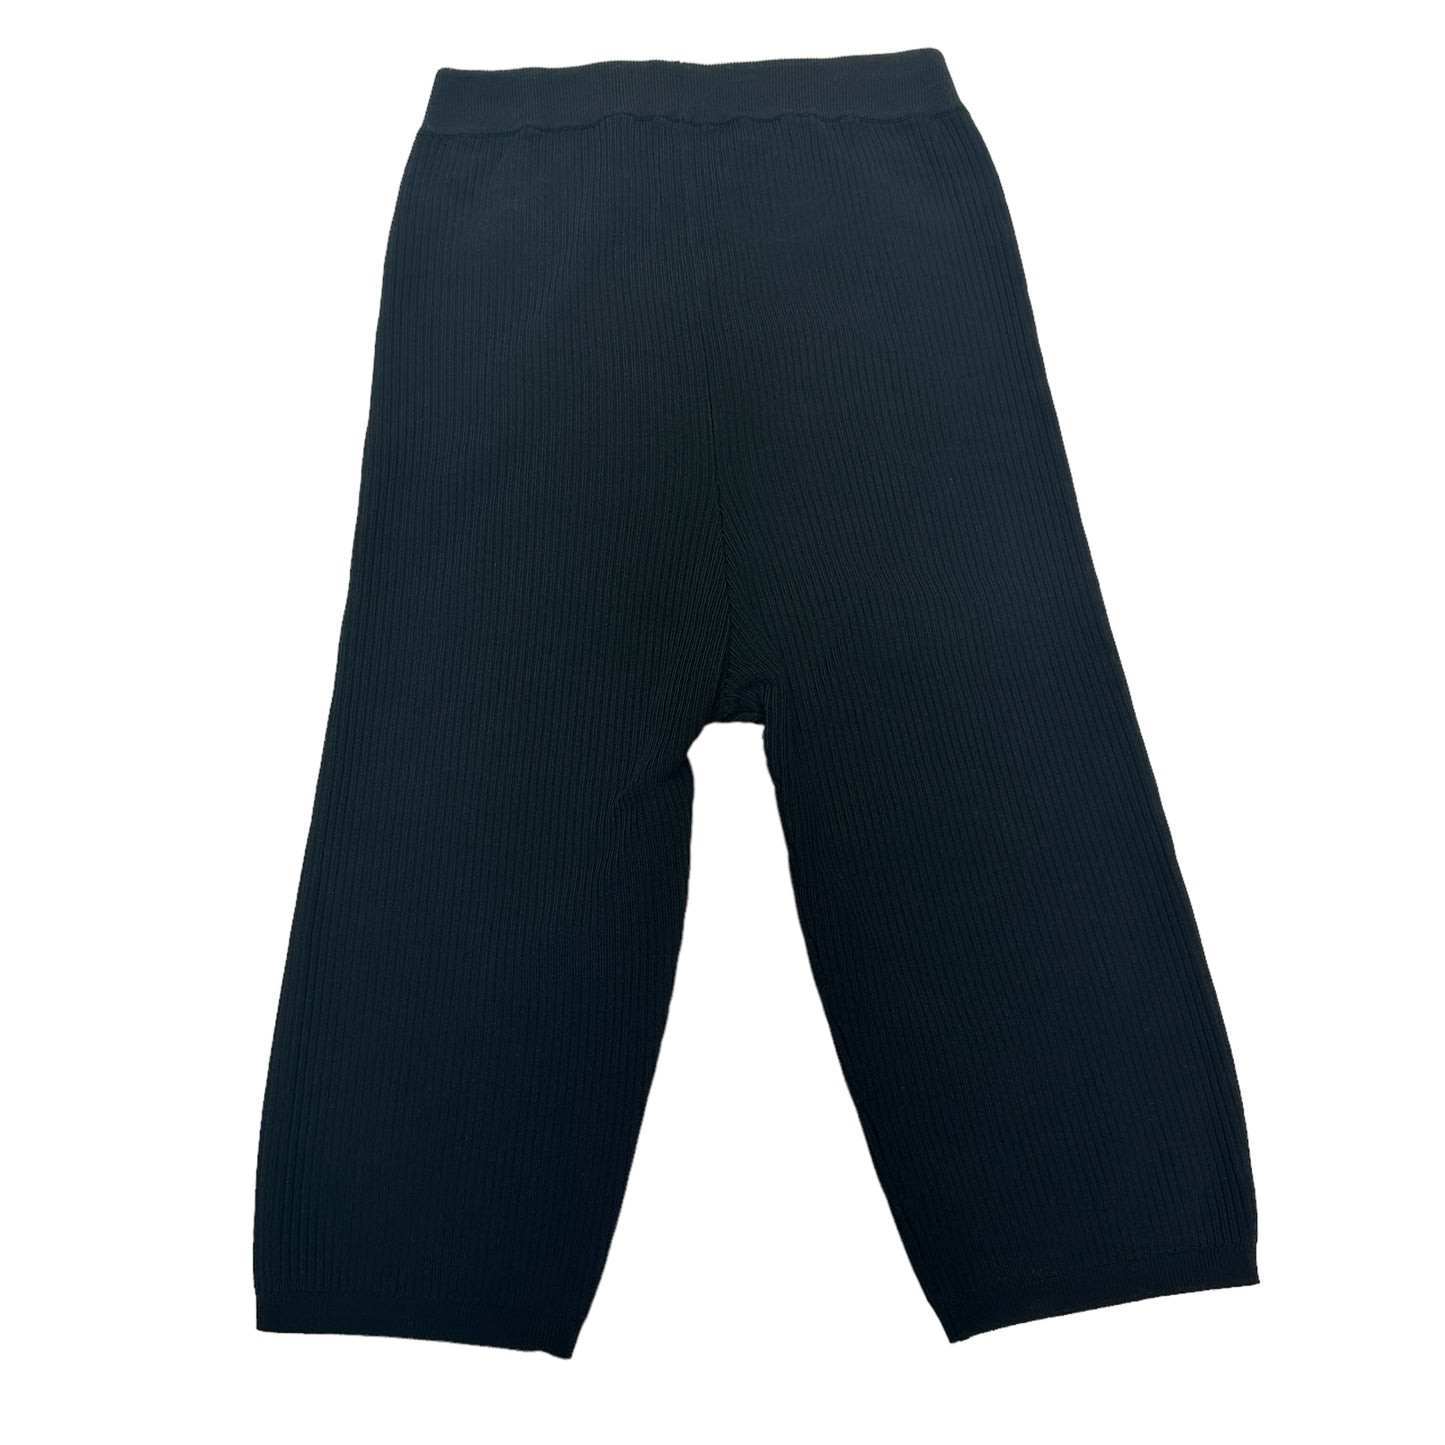 Black Biker Shorts - XS